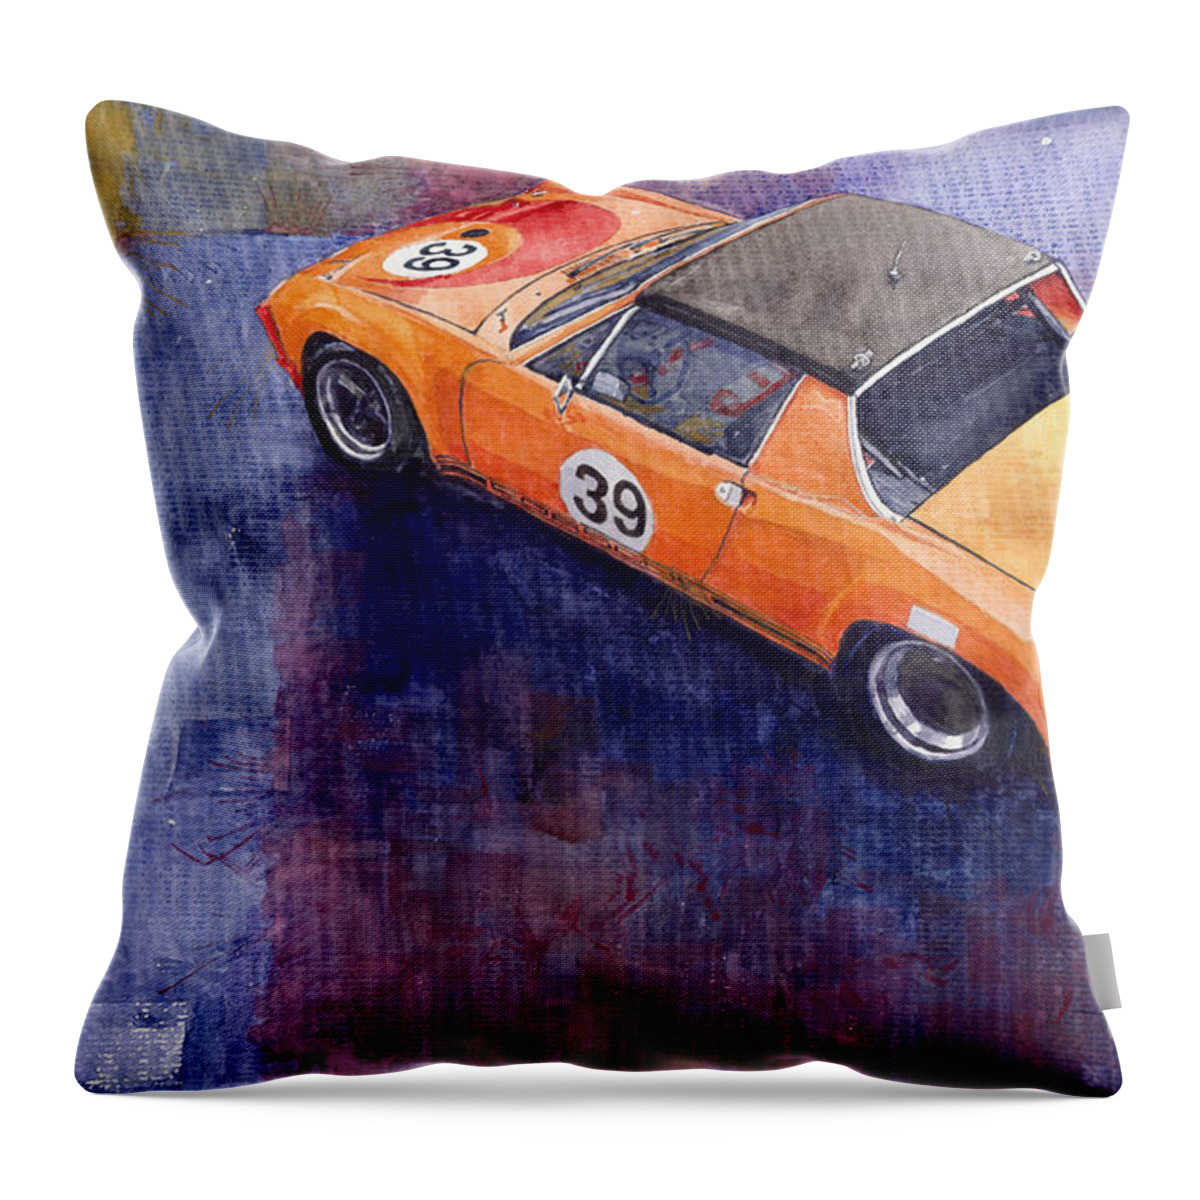 Shevchukart Throw Pillow featuring the painting Porsche 914 GT by Yuriy Shevchuk